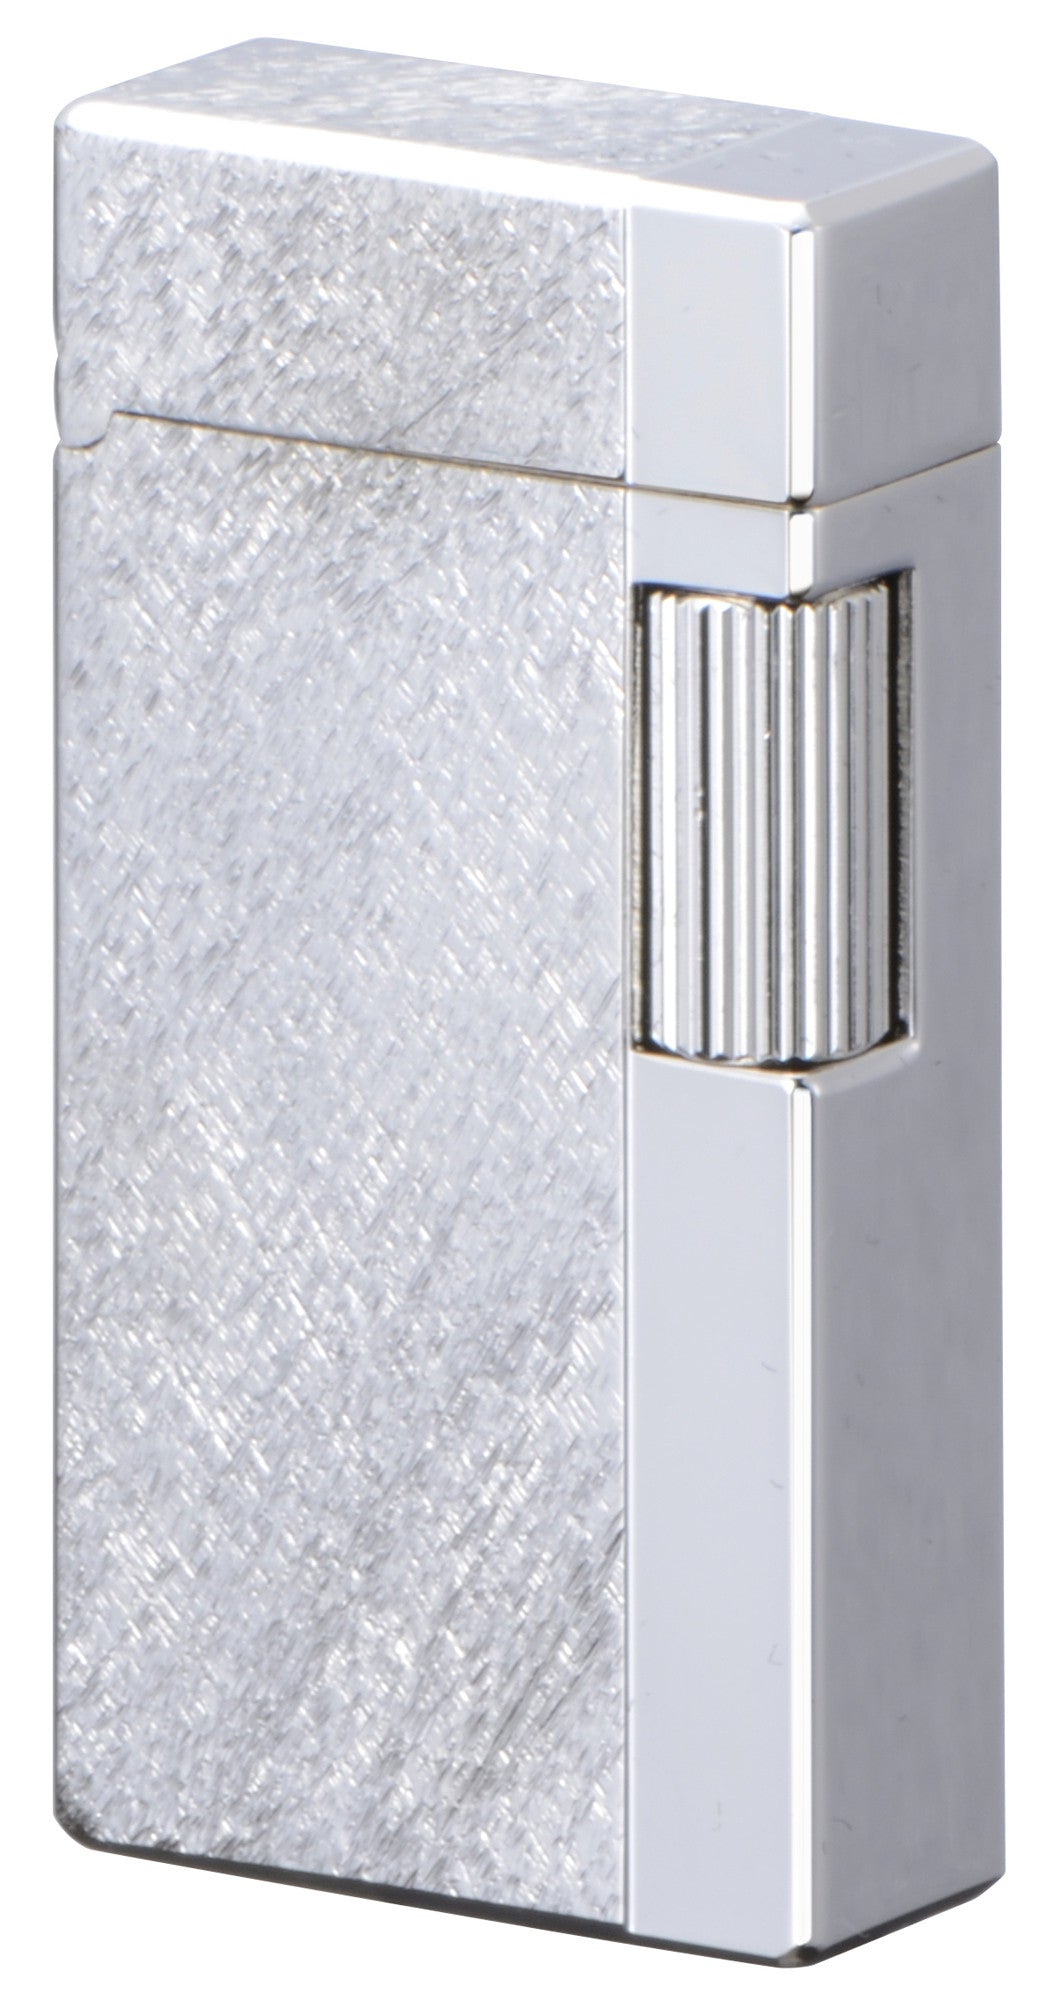 Sarome Flint Cigarette Lighter SD1-53 Silver / Random cross hairline / Shiny cut